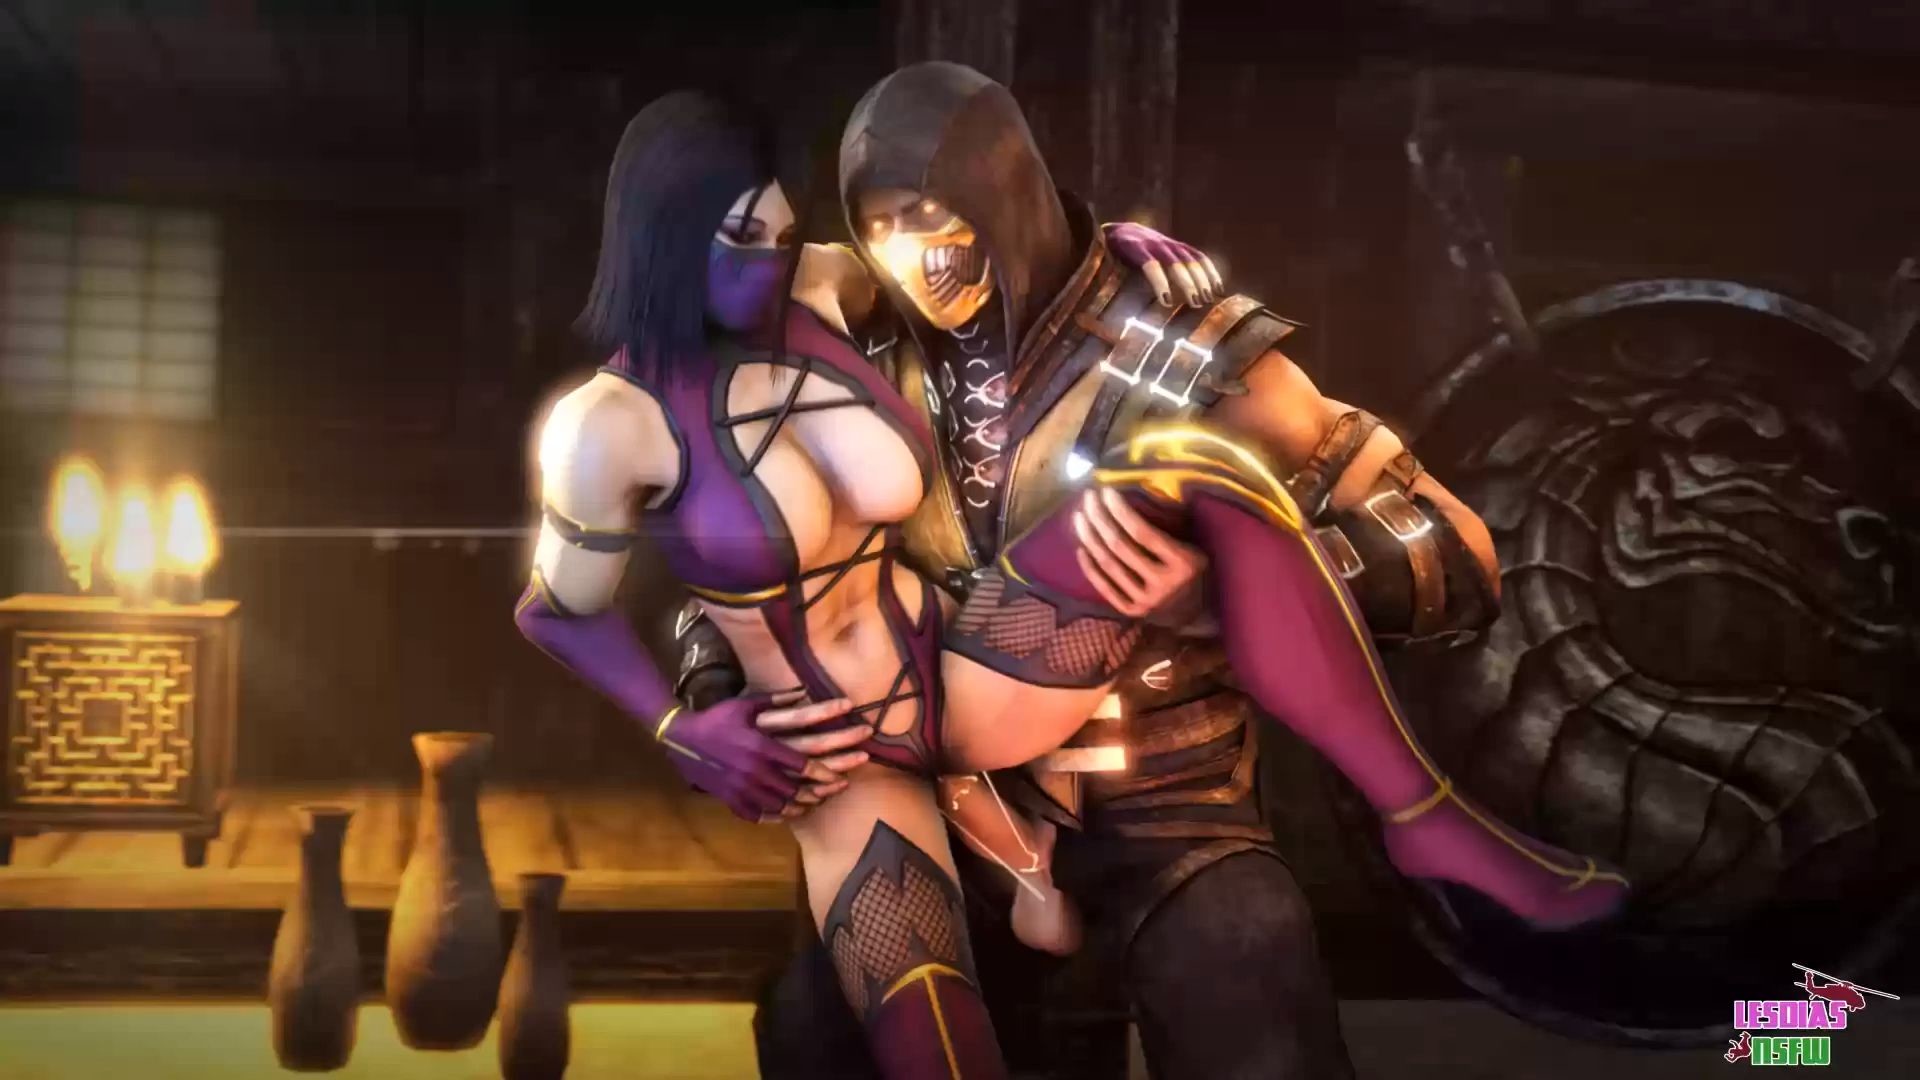 Mileena and Scorpion - Lesdias - Mortal Kombat.